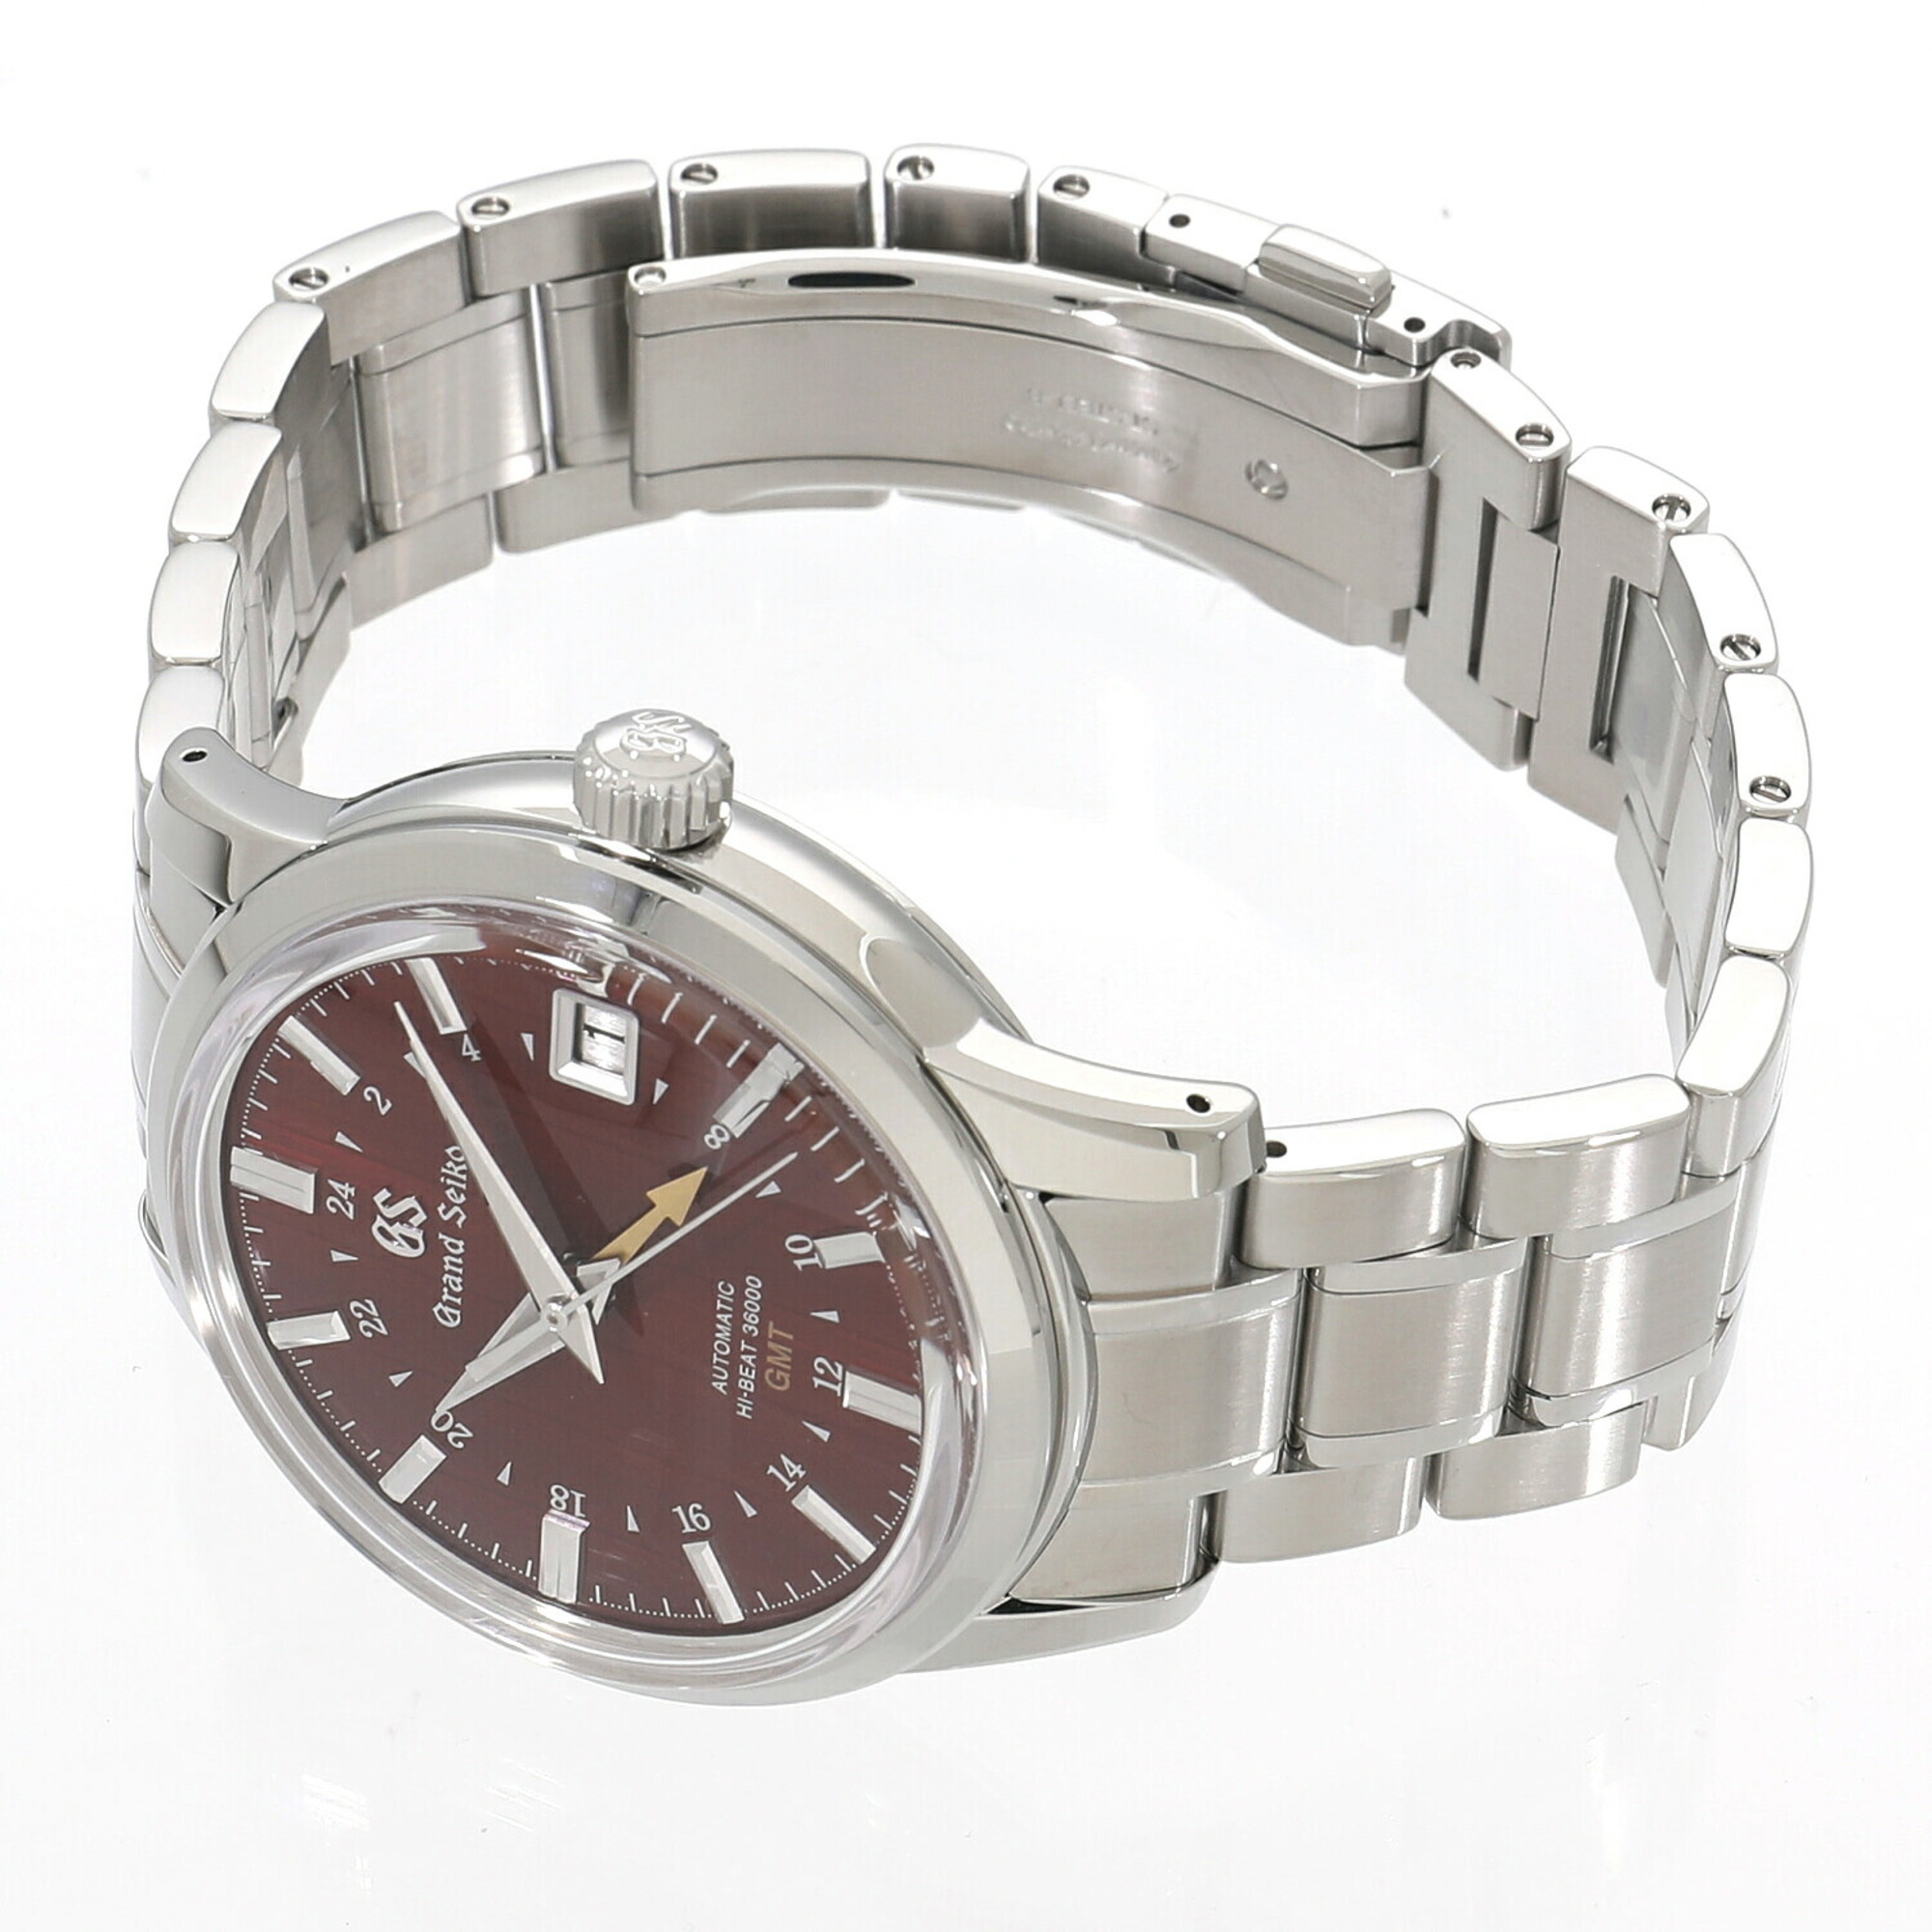 Seiko Grand Elegance Collection Mechanical Hi-Beat GMT SBGJ273/9S86-00N0 Red Men's Watch